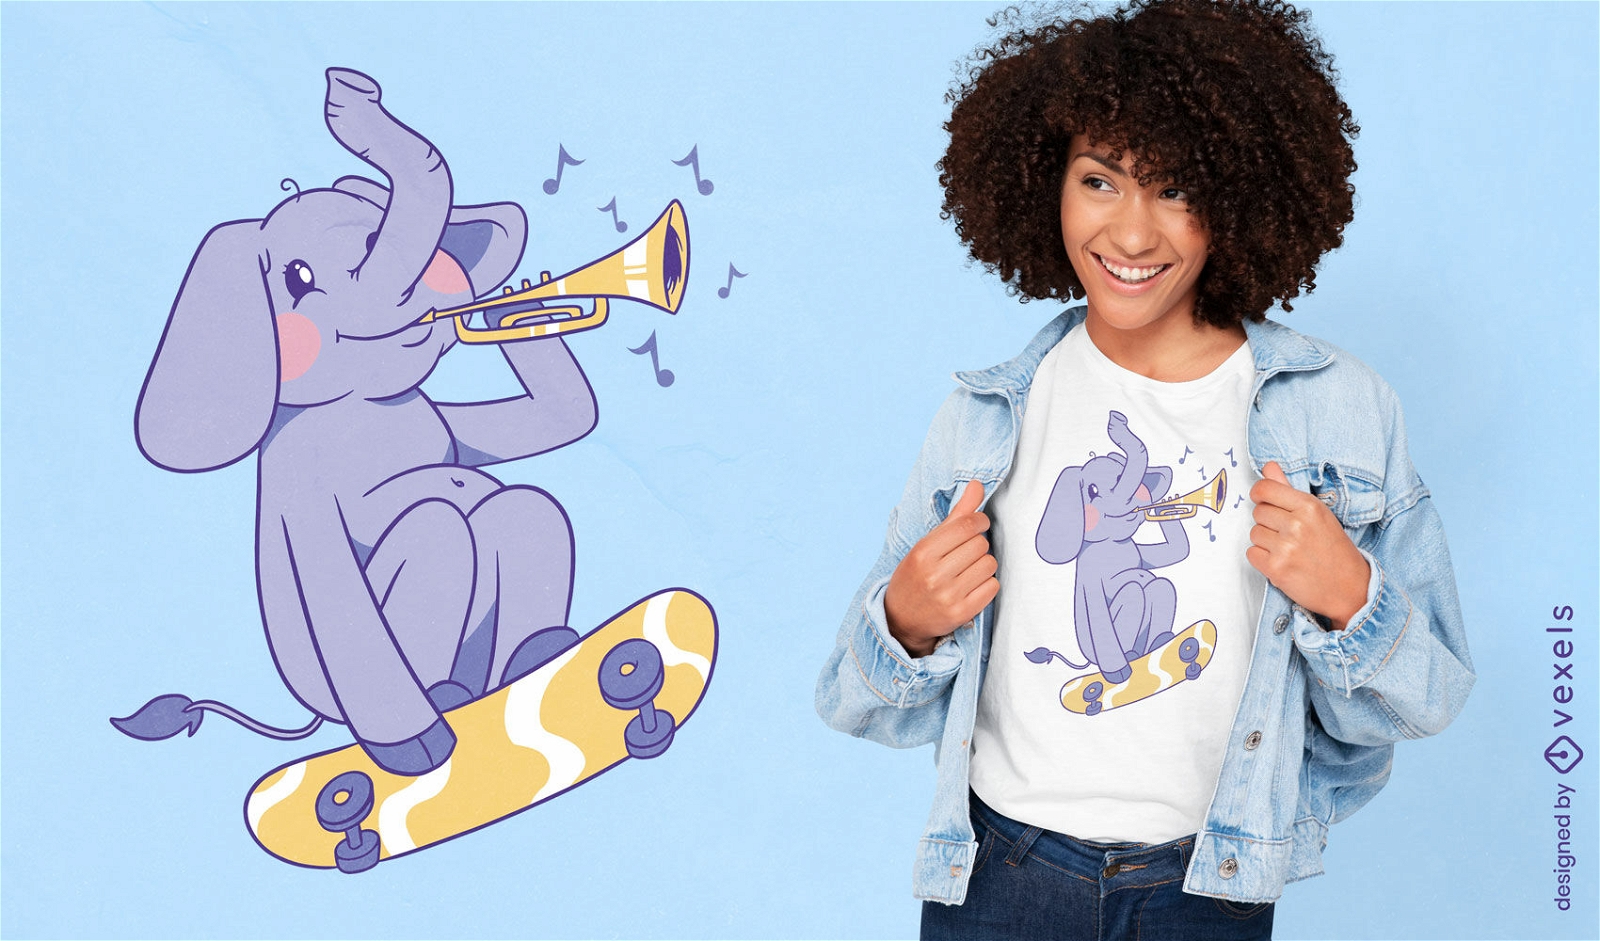 Elephant trumpet skate cartoon t-shirt design